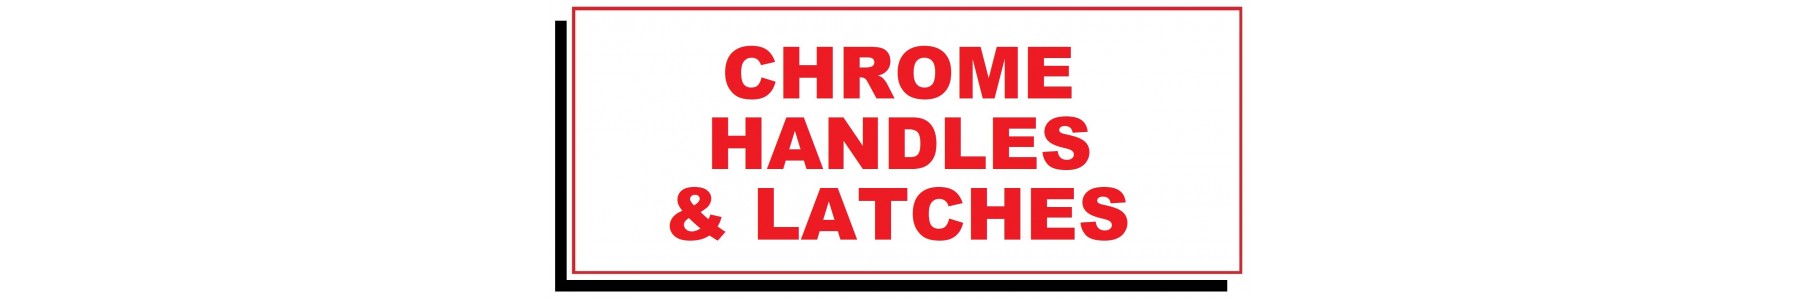 CHROME HANDLES & LATCHES